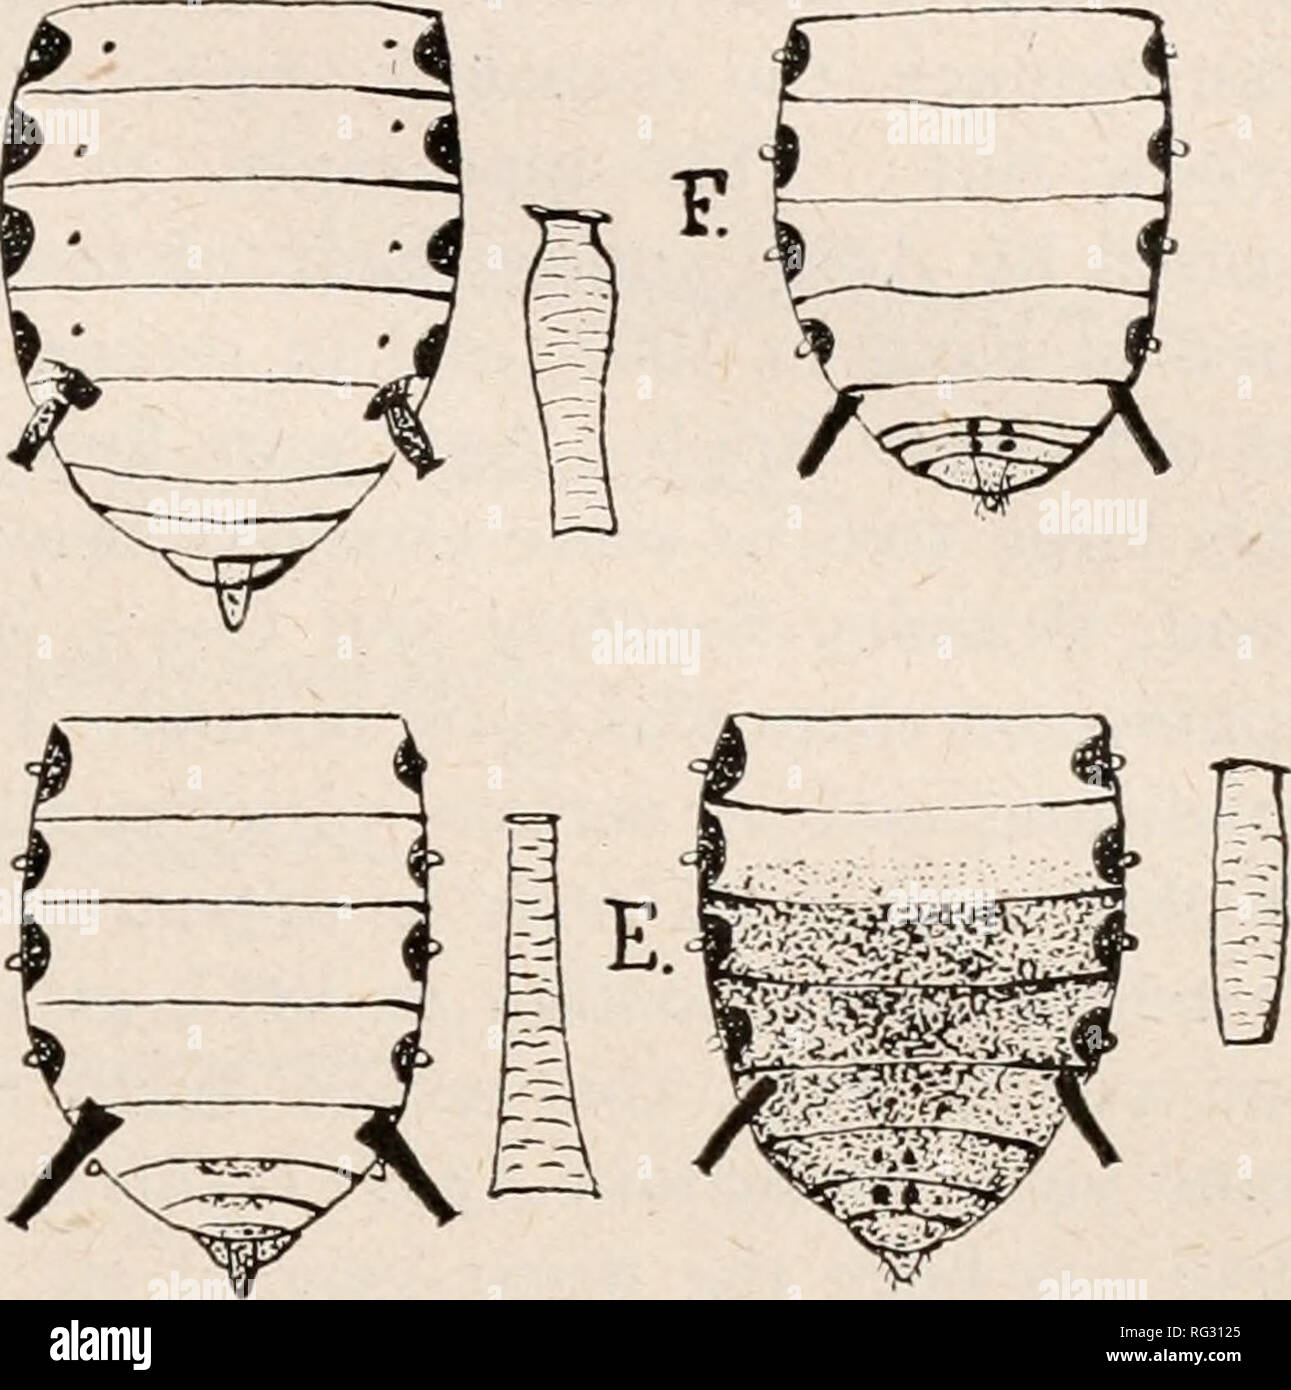 . The Canadian entomologist. Insects; Entomology. r!4-^^s^^ -^ 5. i'^m ^.^, m ,1 [-- D.. Fig. 4.âBodies of Apple Aphides. A, Aphis kochii Schonteden (spring migrant). B,.4. kochii Sch. (autumn migrant). C. Siphocnryne avena: Fahr. X), Aphis pomi Ge G. E, .4. crataegi Kaltenb. F', .4. kochii (sorbi ol Sanderson) spring migrant (after Sanderson). -snasS^^^^^^^S: irrrrmrnii i i lo^ a ,-y- 1!!^?'!' 5^V3[2yvâ Lixj,iii.u^'7r.,. â â r.i. â T:Â»'Tt''J^V.l'Â».-*.y, iCp^ B. C. D F. Fig. 5.âAntennae of alate viviparous female Apple Aphides. A, Aphis kochii Schonteden, 13, V, '12 (sprina migrant). B. .4.  Stock Photo